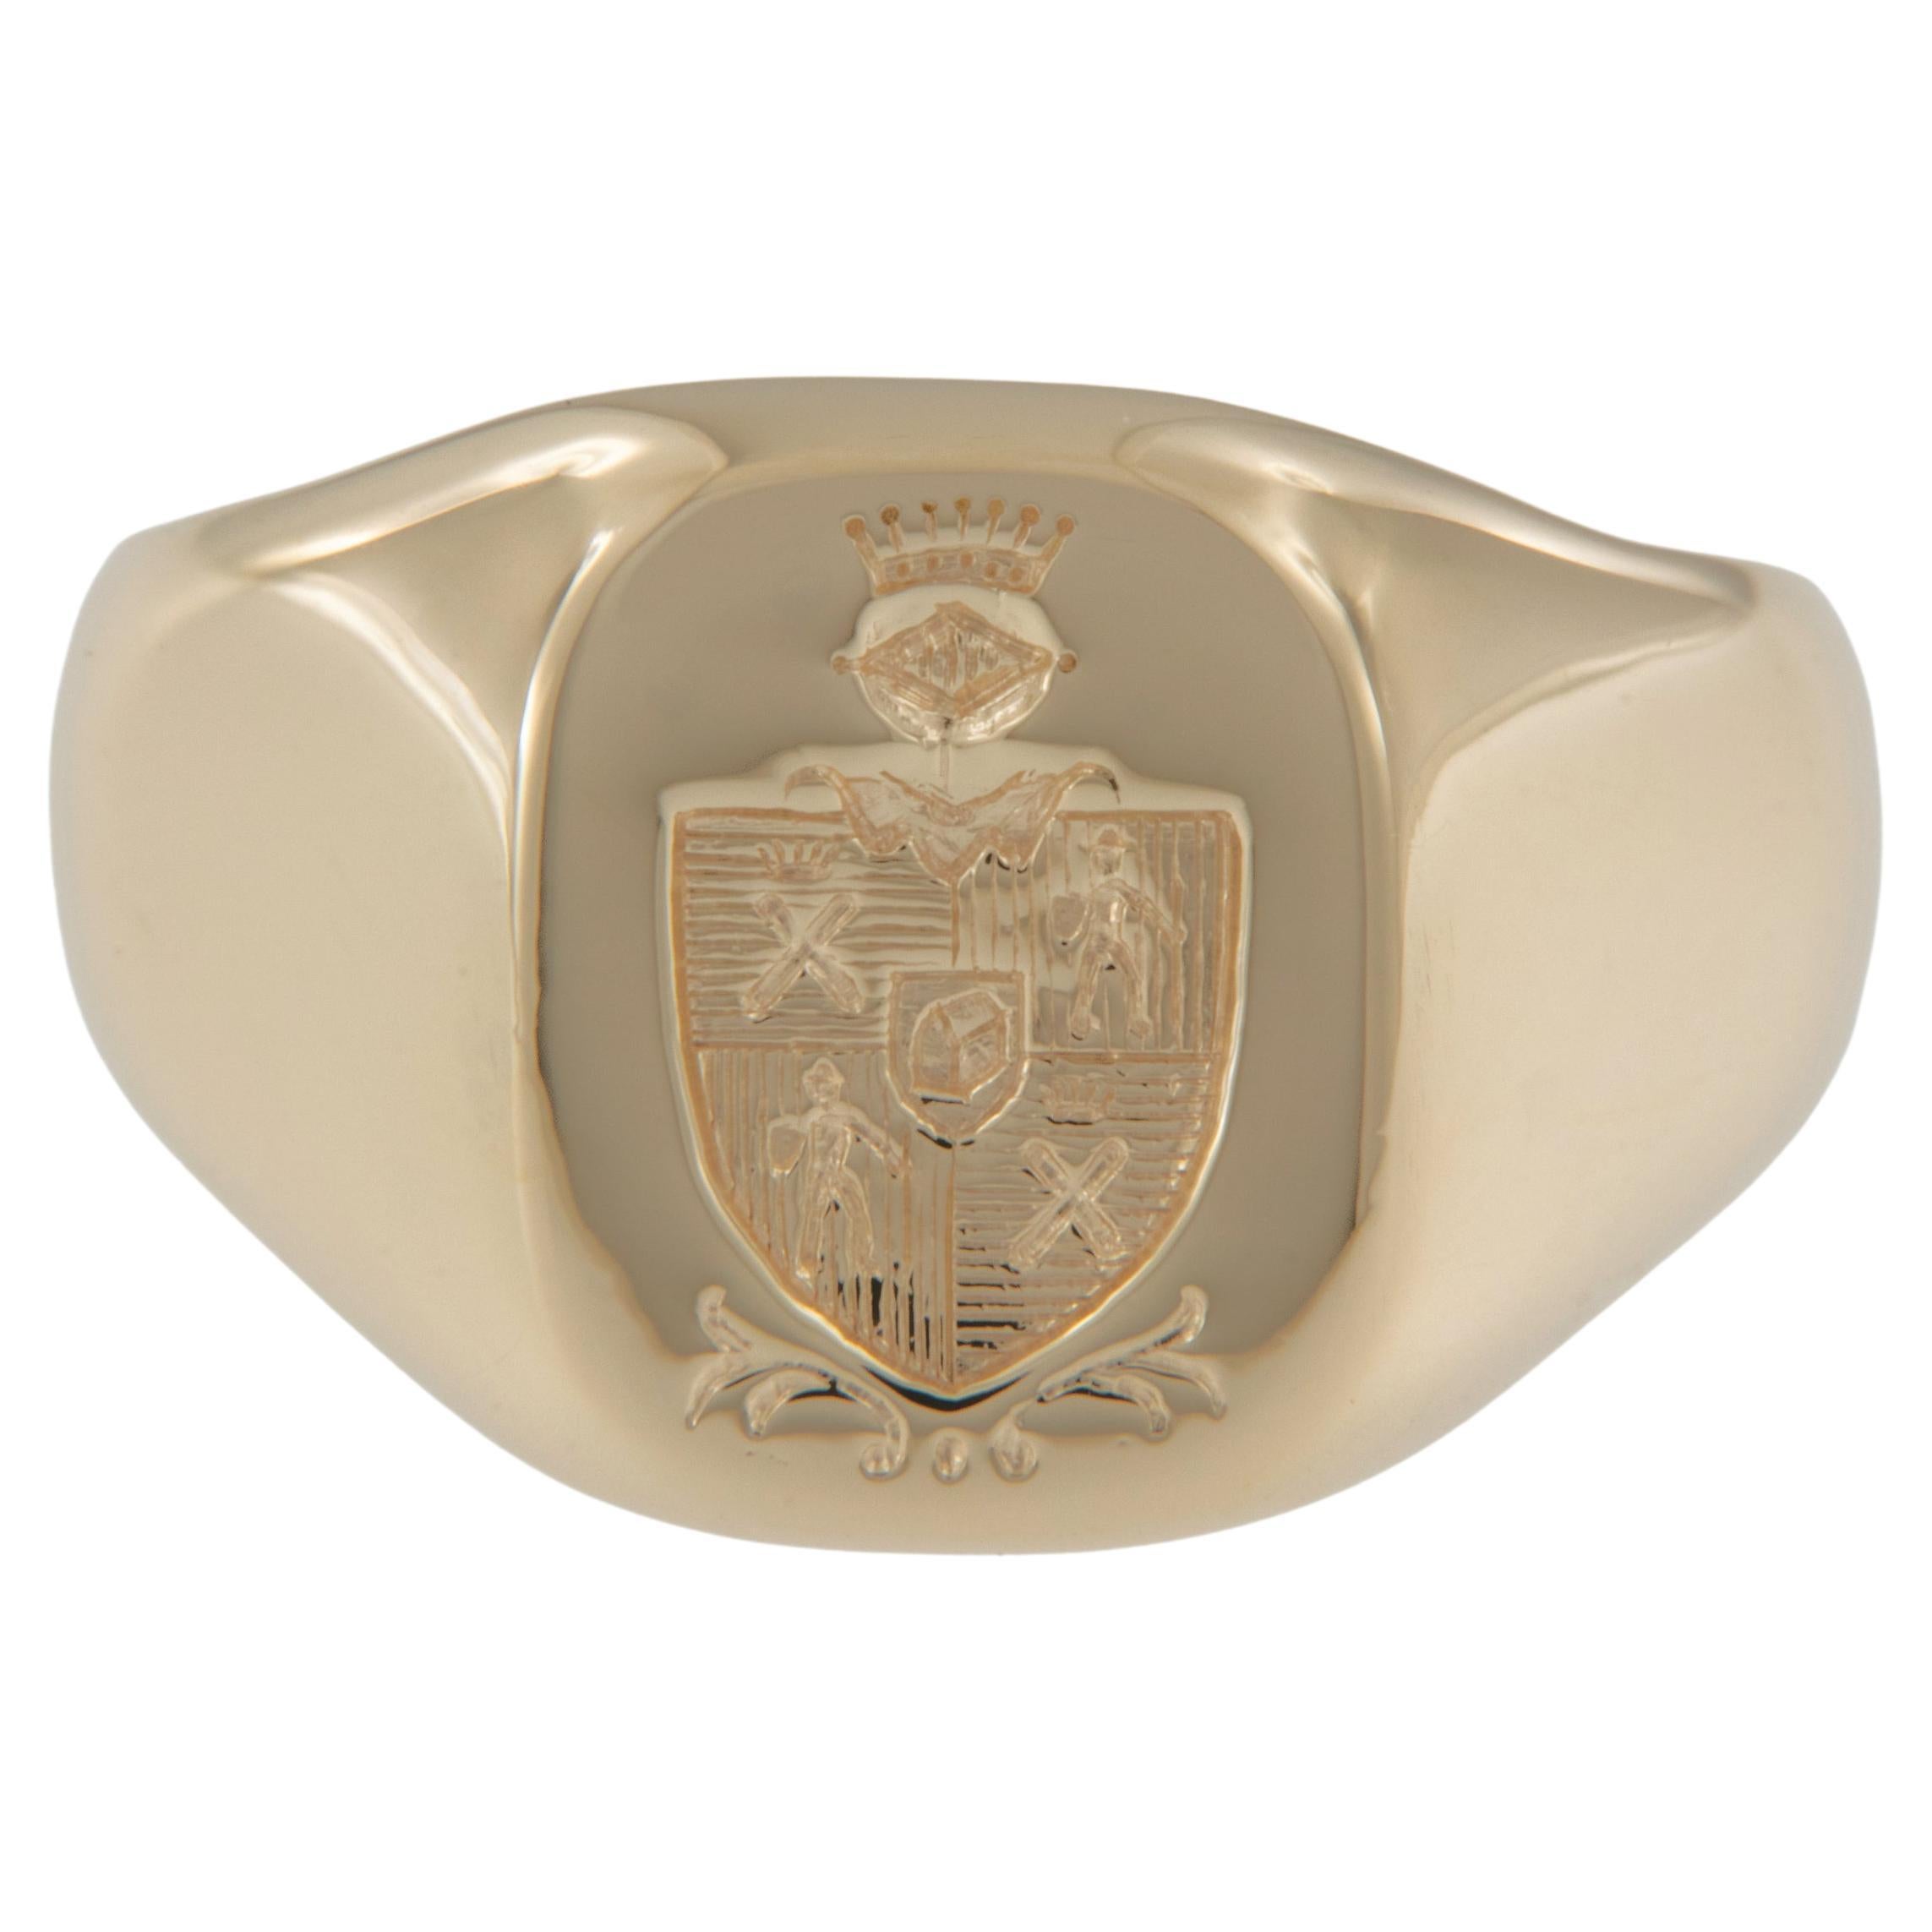 Rarely seen Vintage Tiffany & Co. 18 Karat Yellow Gold Crest Signet Seal Ring